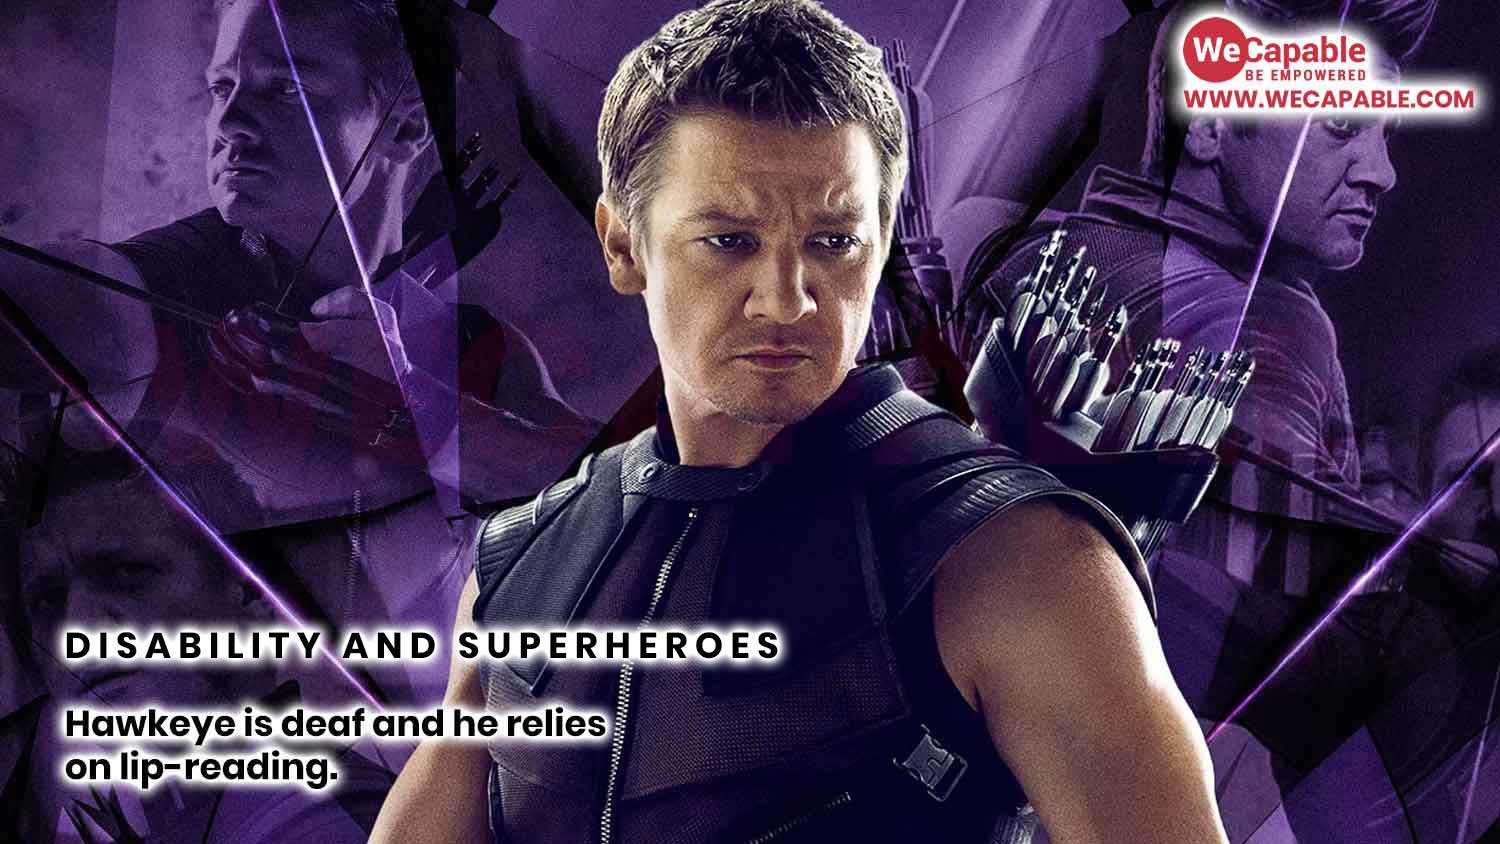 Superhero Hawkeye has a disability. He is deaf.